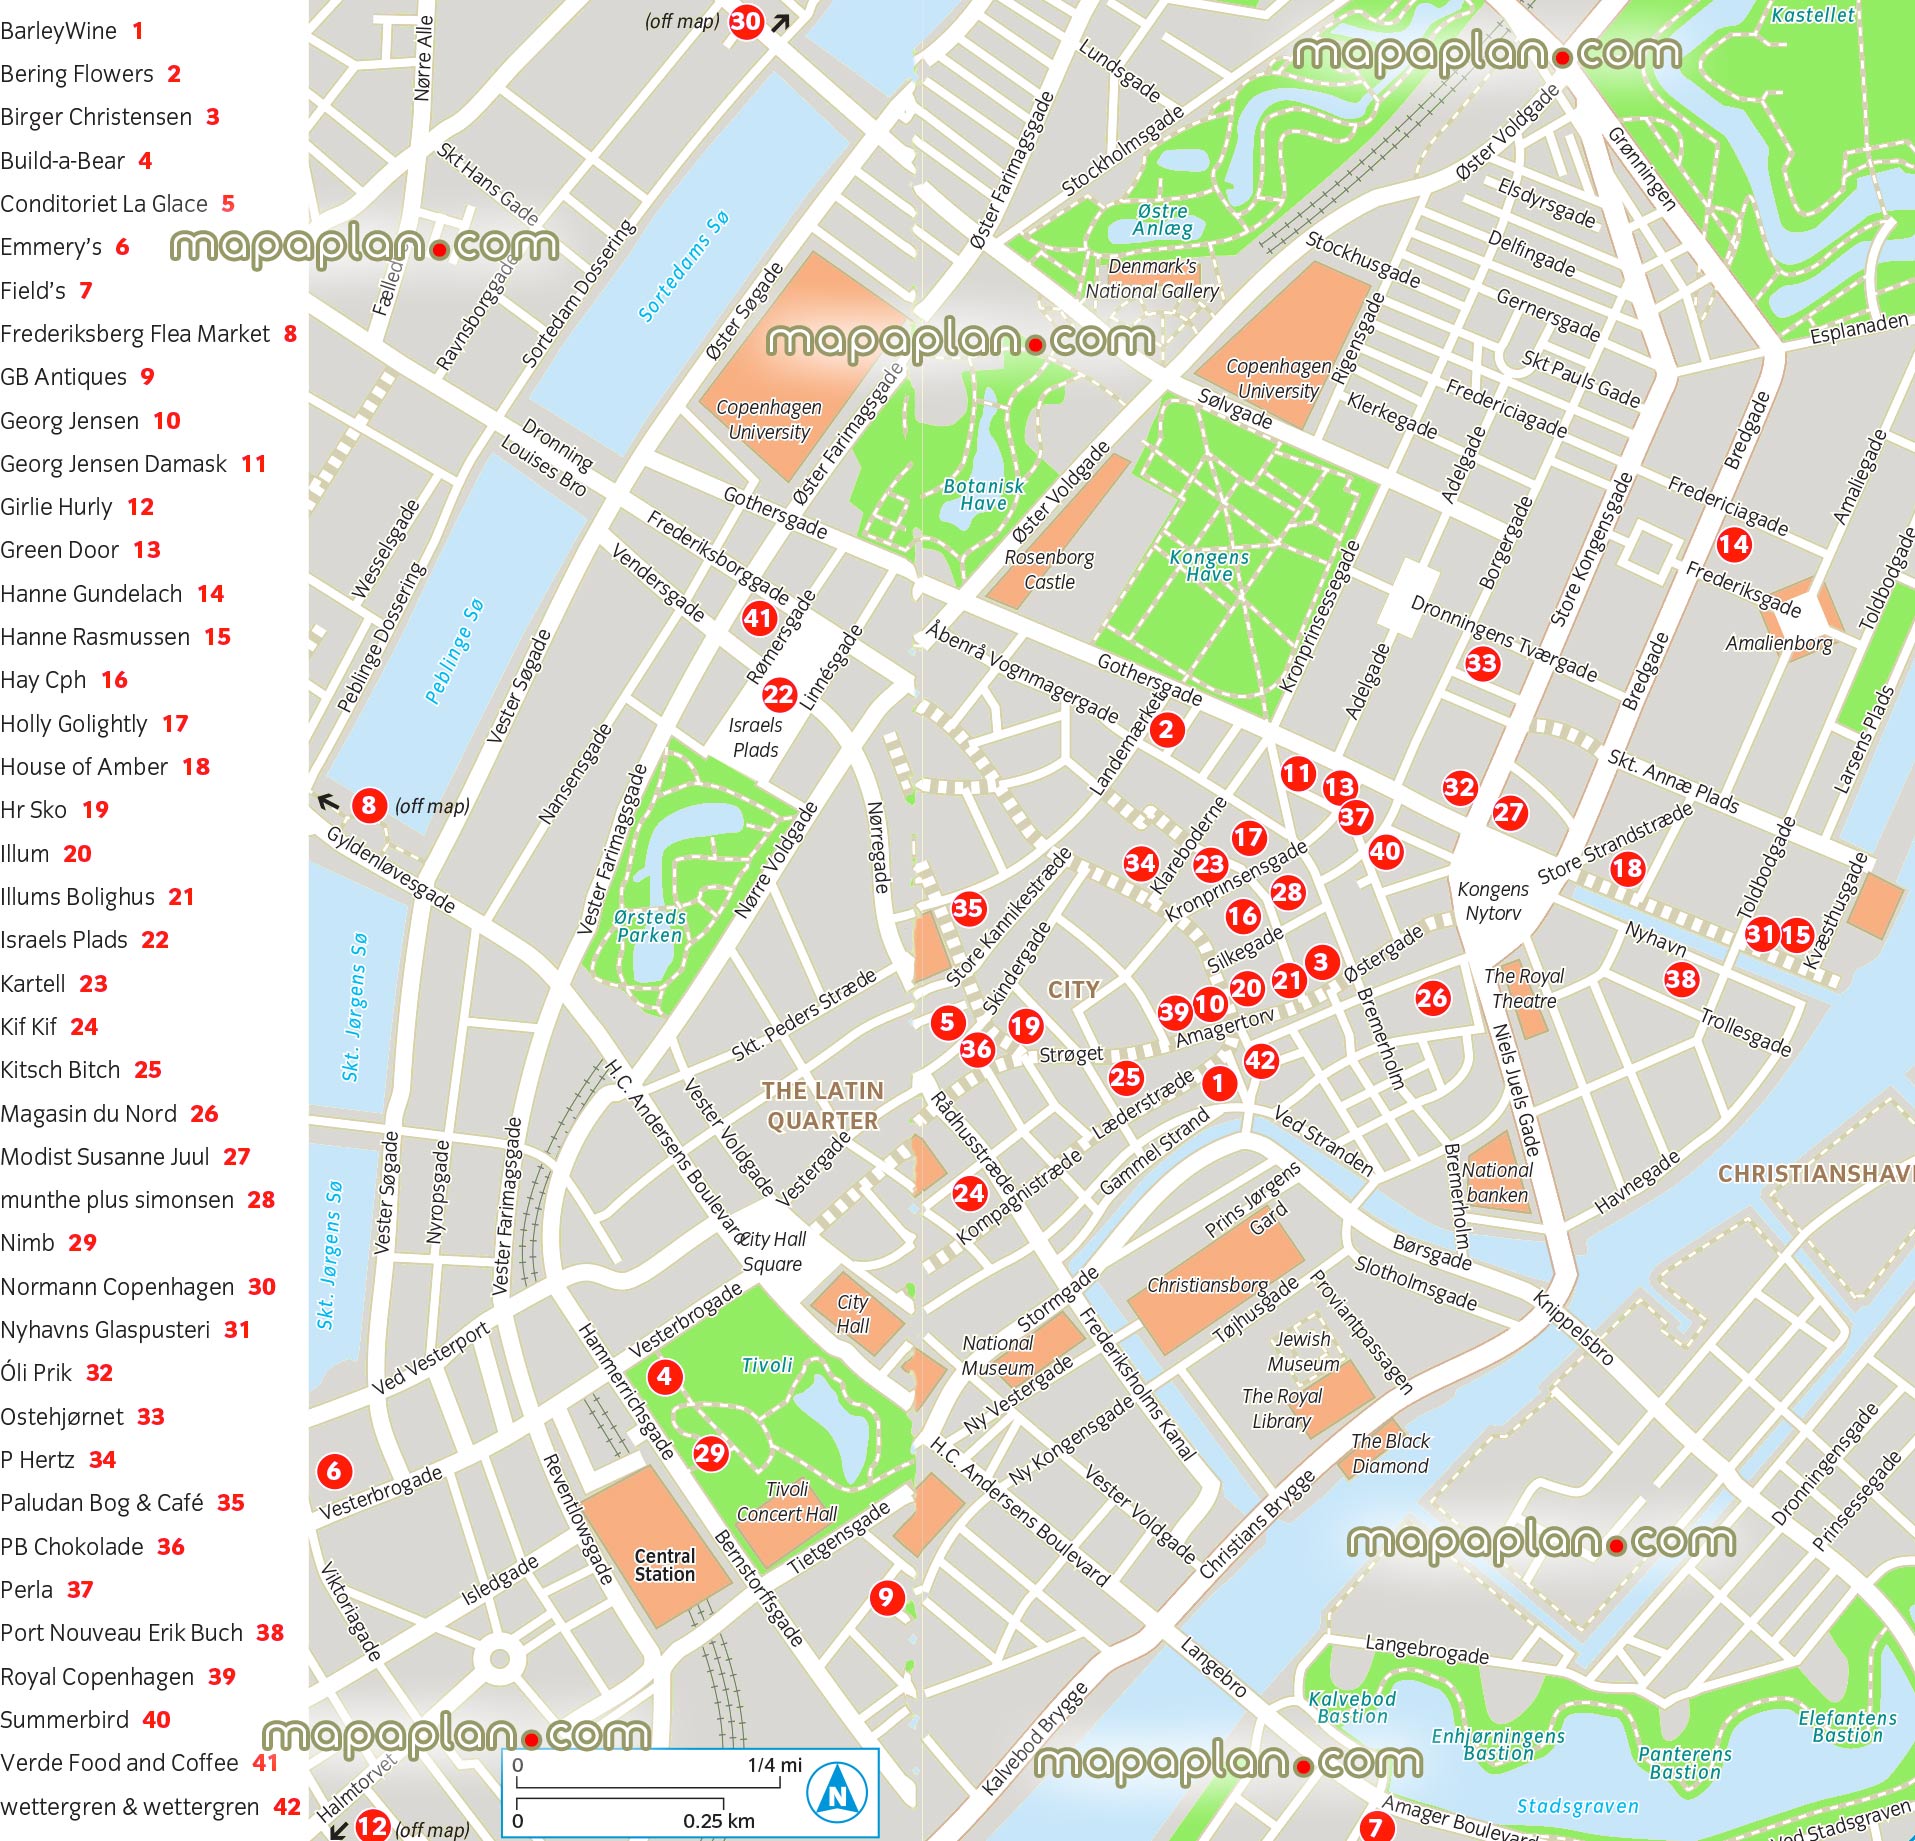 Copenhagen map Copenhagen downtown shopping destinations map showing